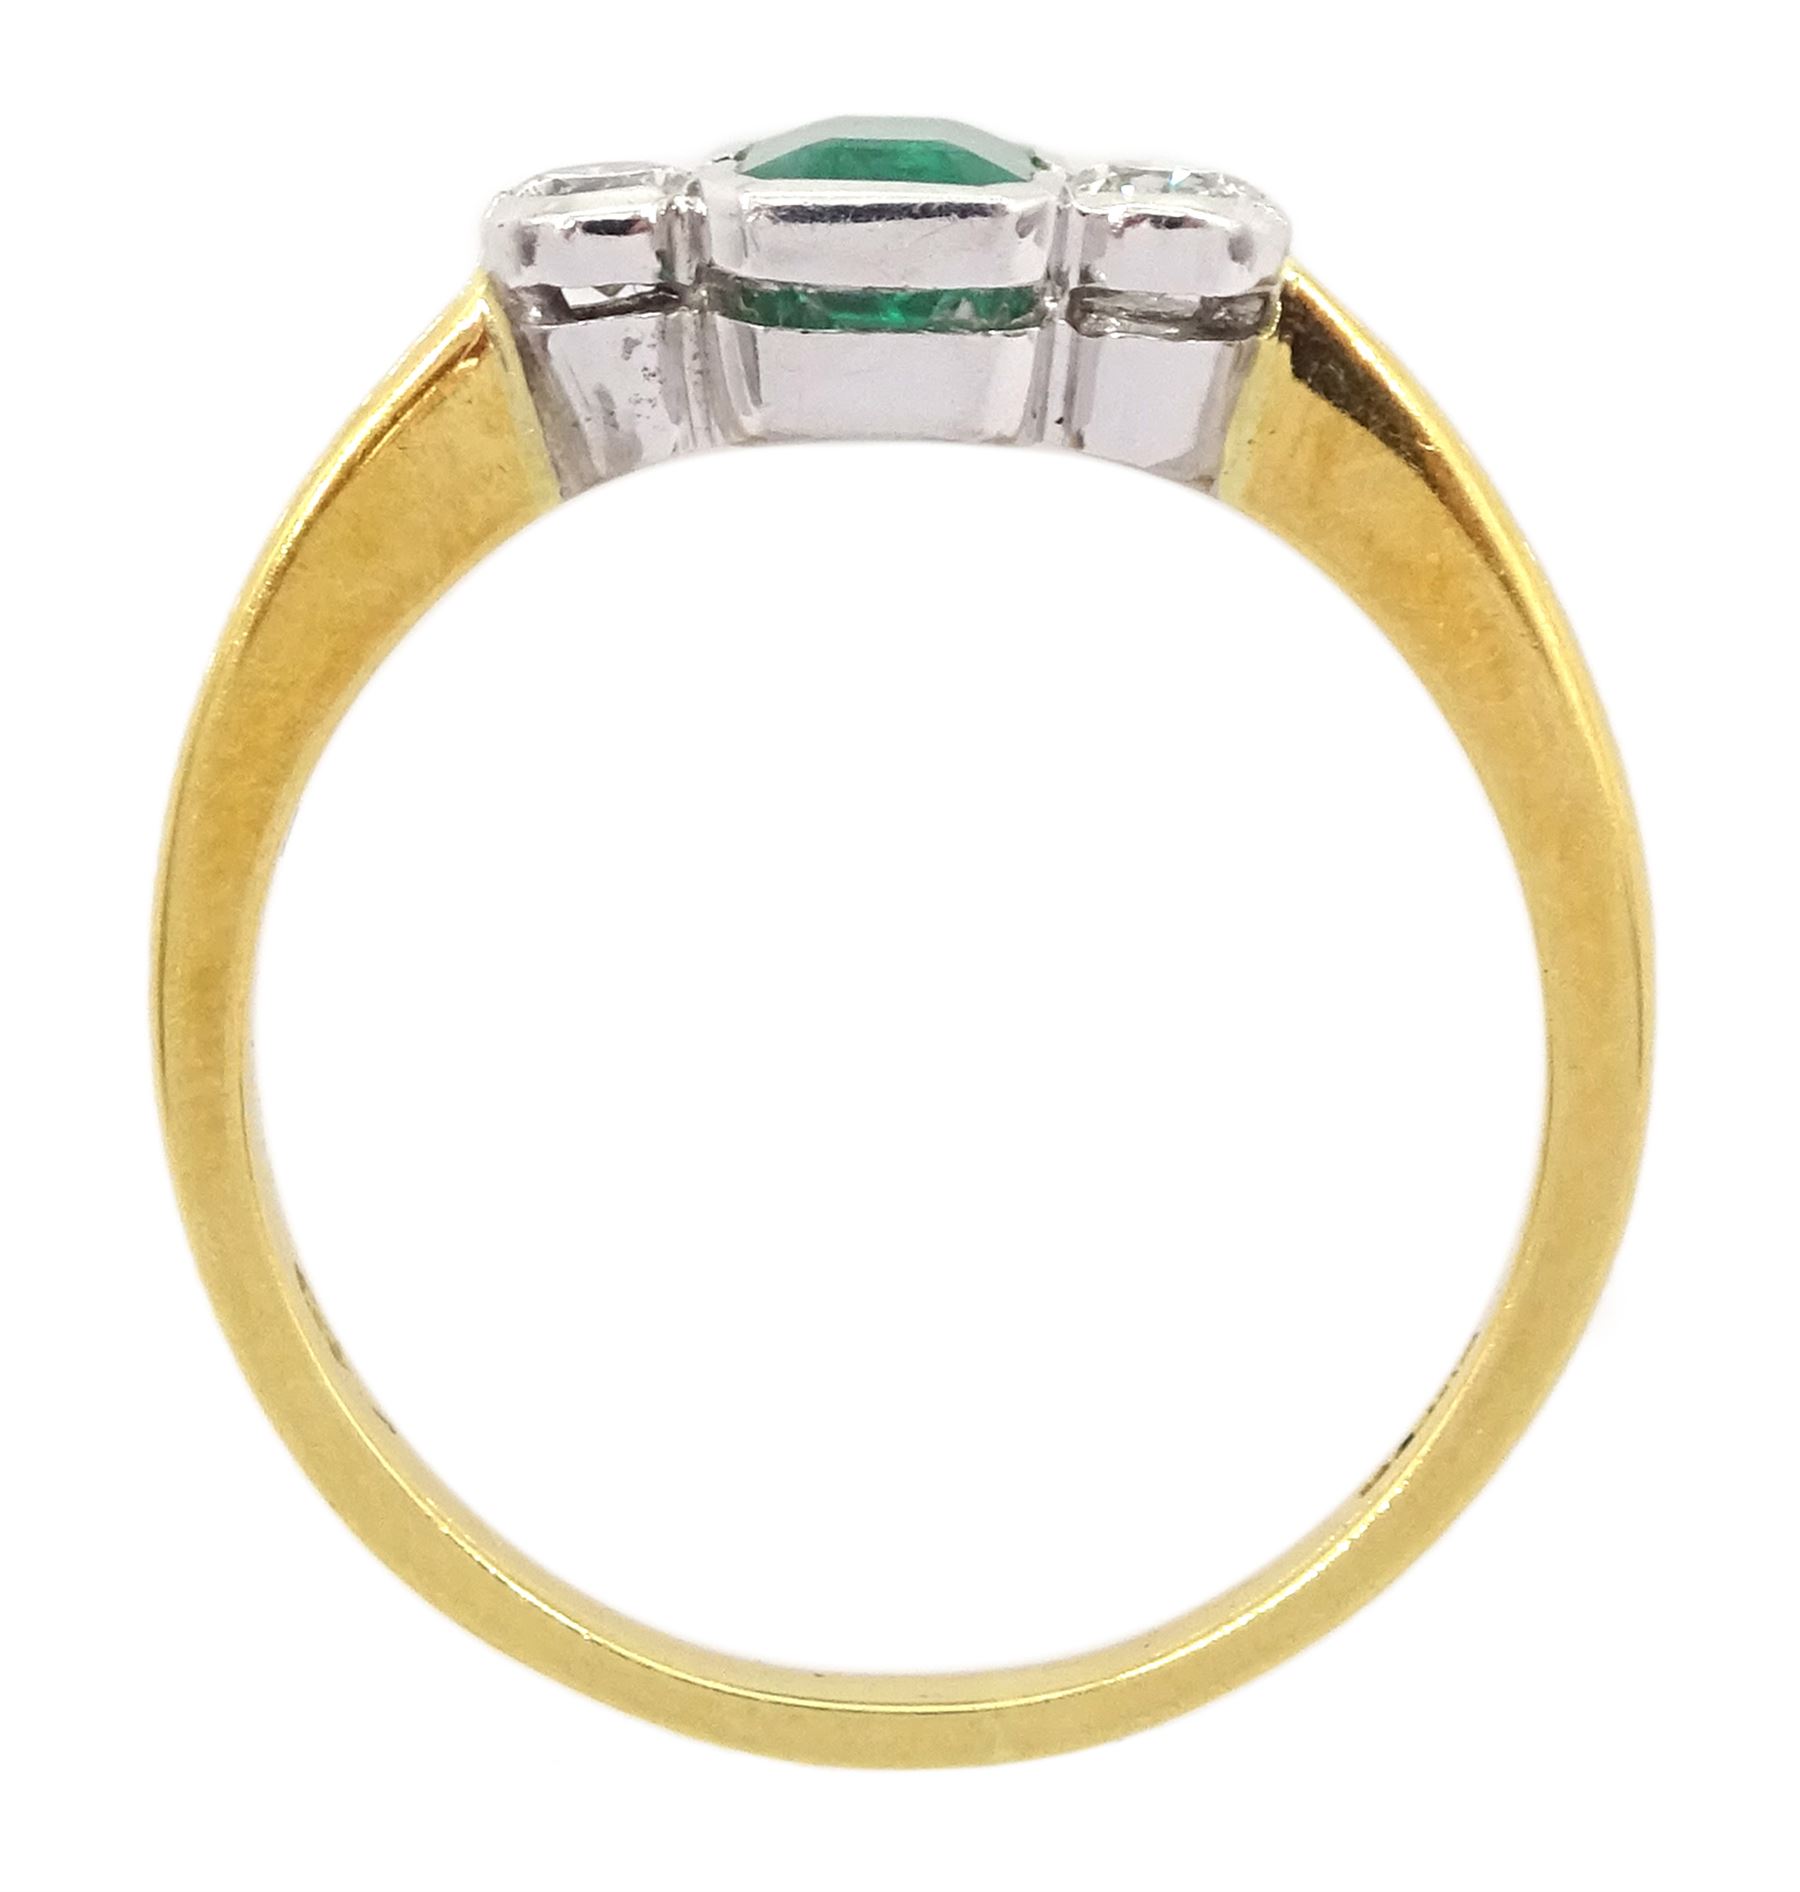 18ct gold three stone octagonal cut emerald and round brilliant cut diamond ring - Image 4 of 4